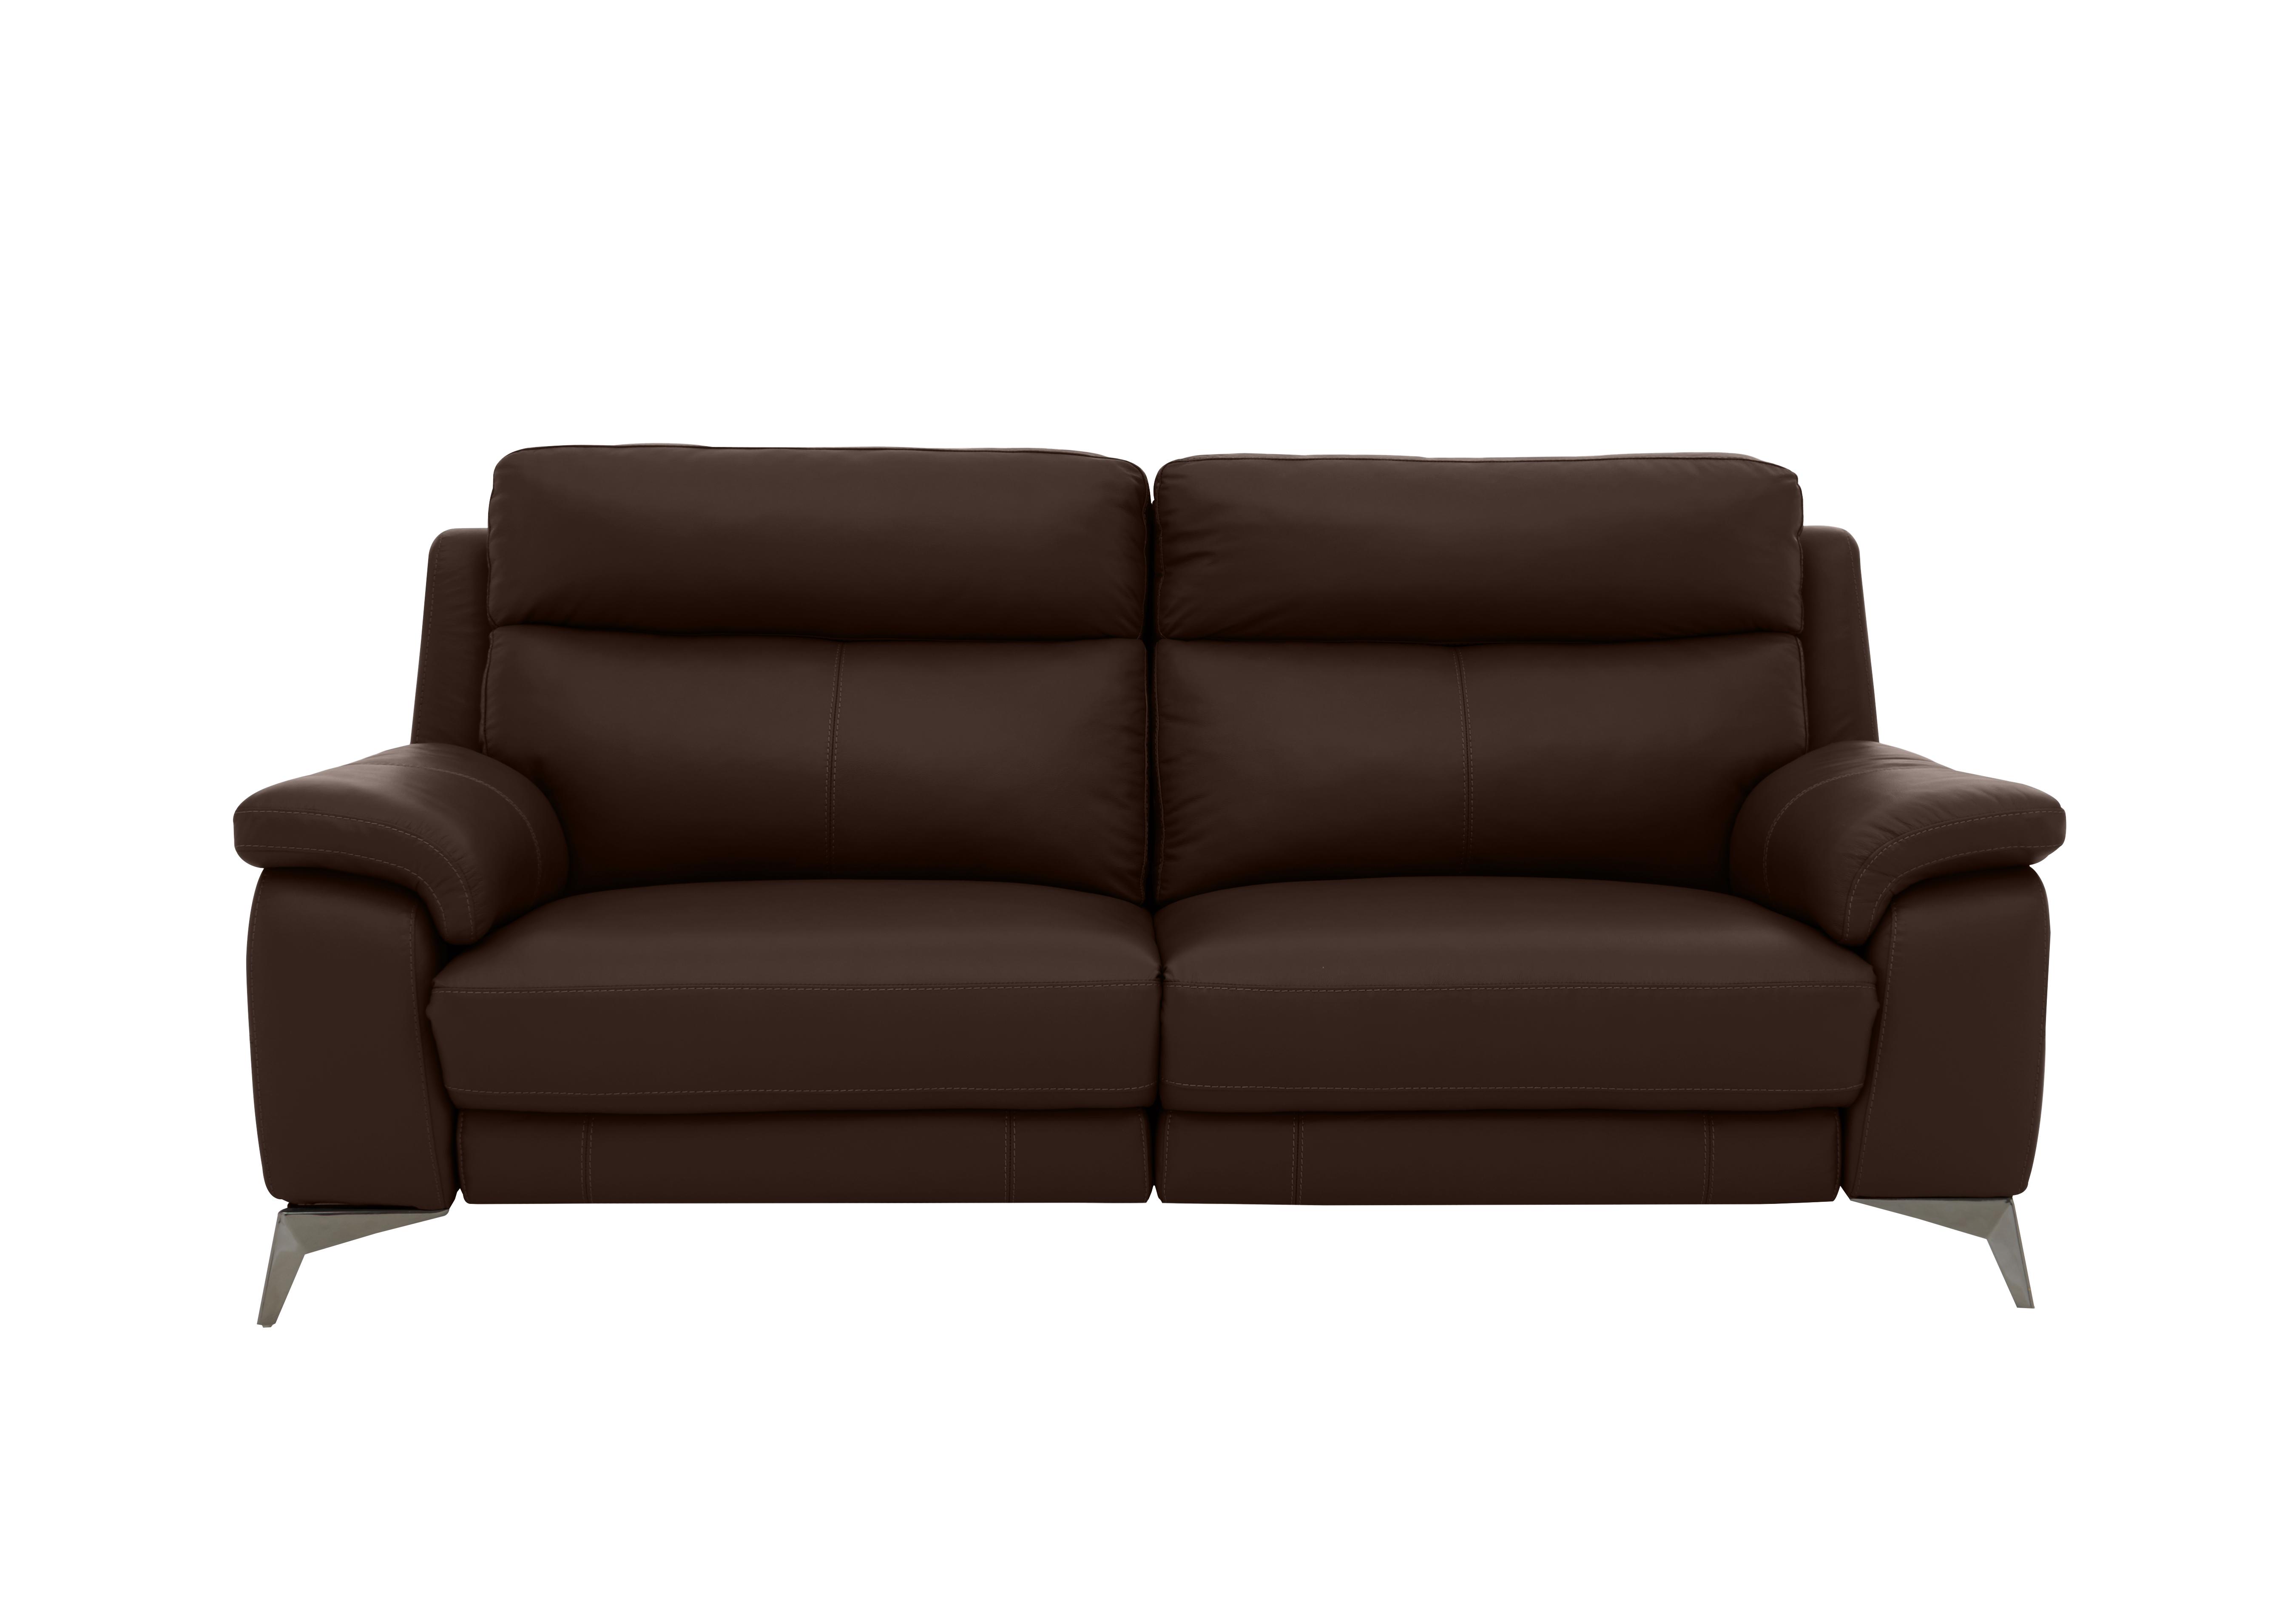 Missouri 3 Seater Leather Recliner Sofa with Power Headrest in Bv-1748 Dark Chocolate on Furniture Village